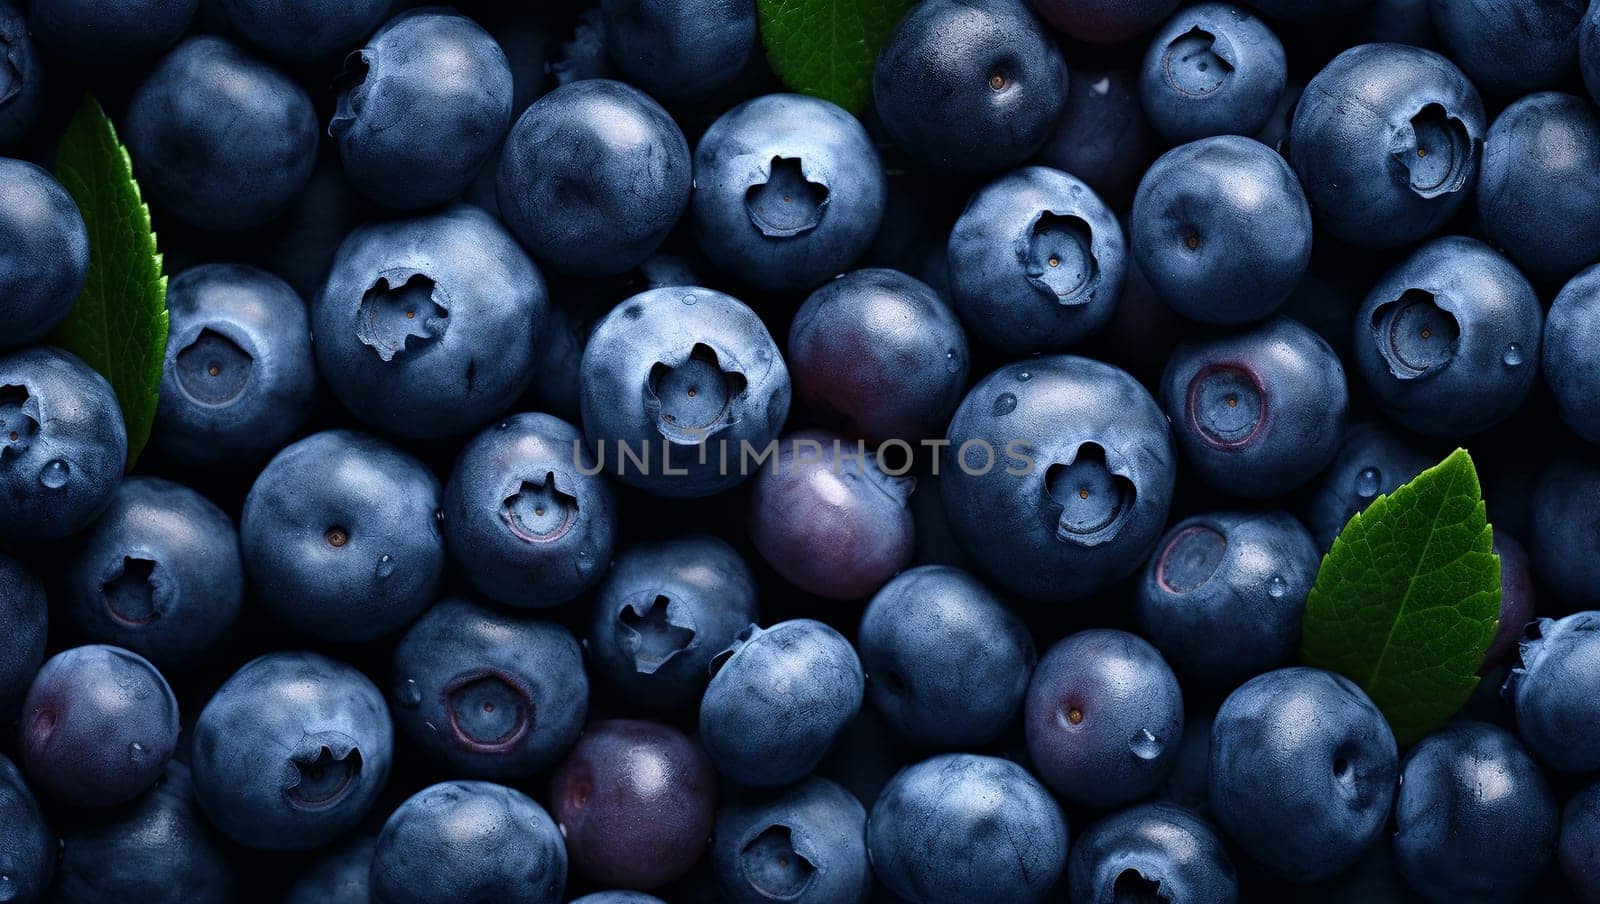 Blueberry background. Blue, juicy blueberries, fruit. High quality illustration